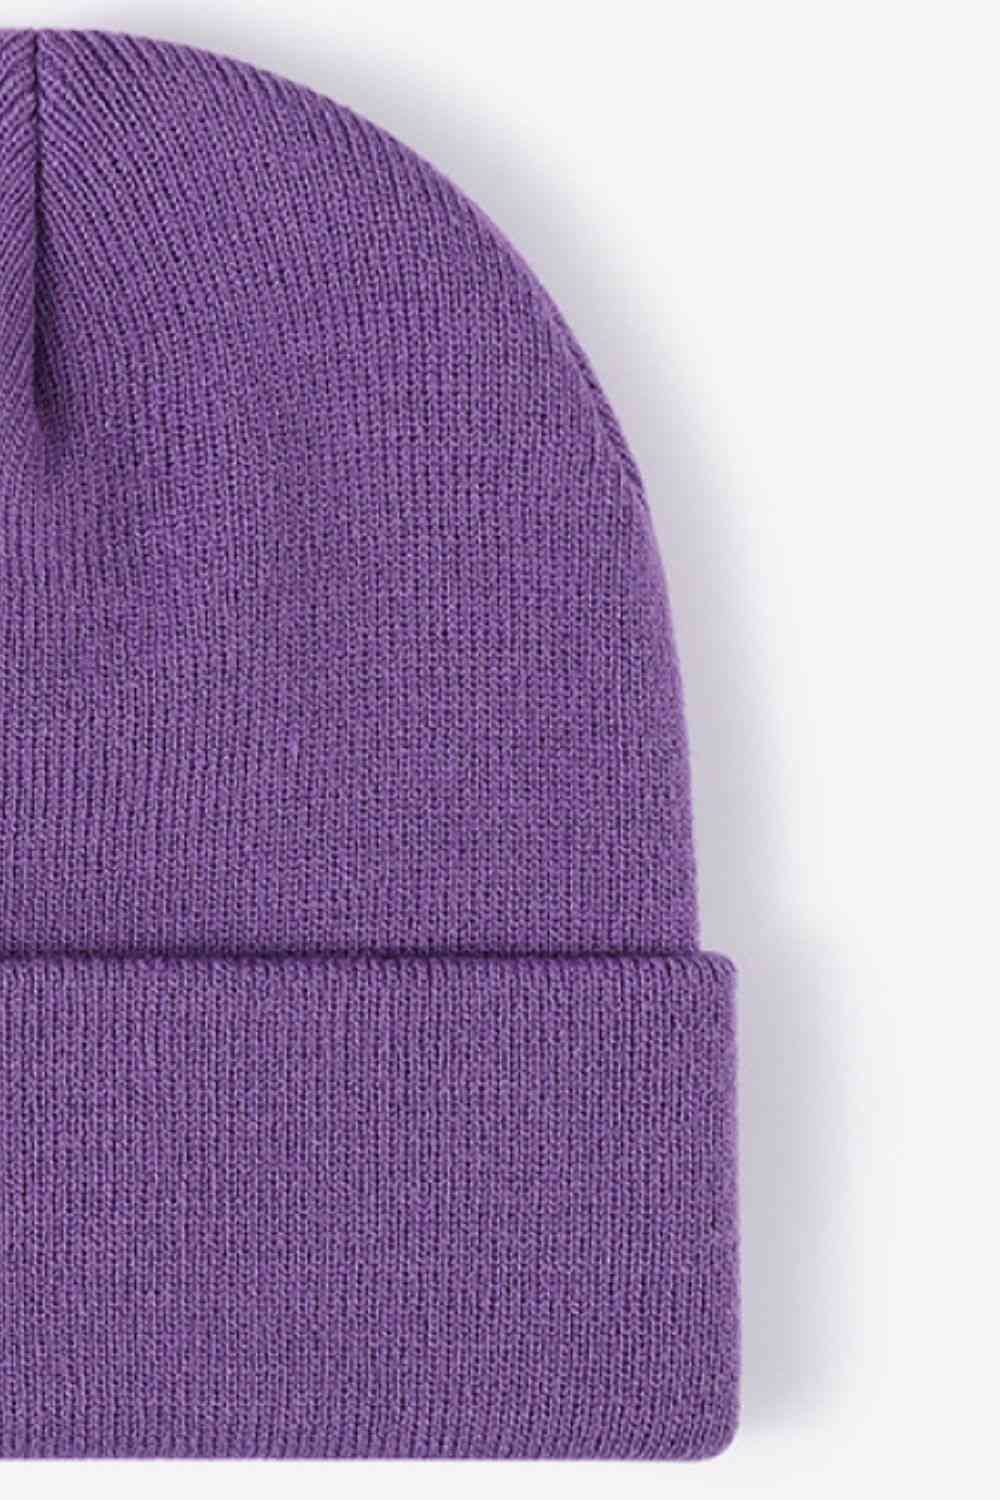 Dim Gray Cuff Knit Beanie Winter Accessories